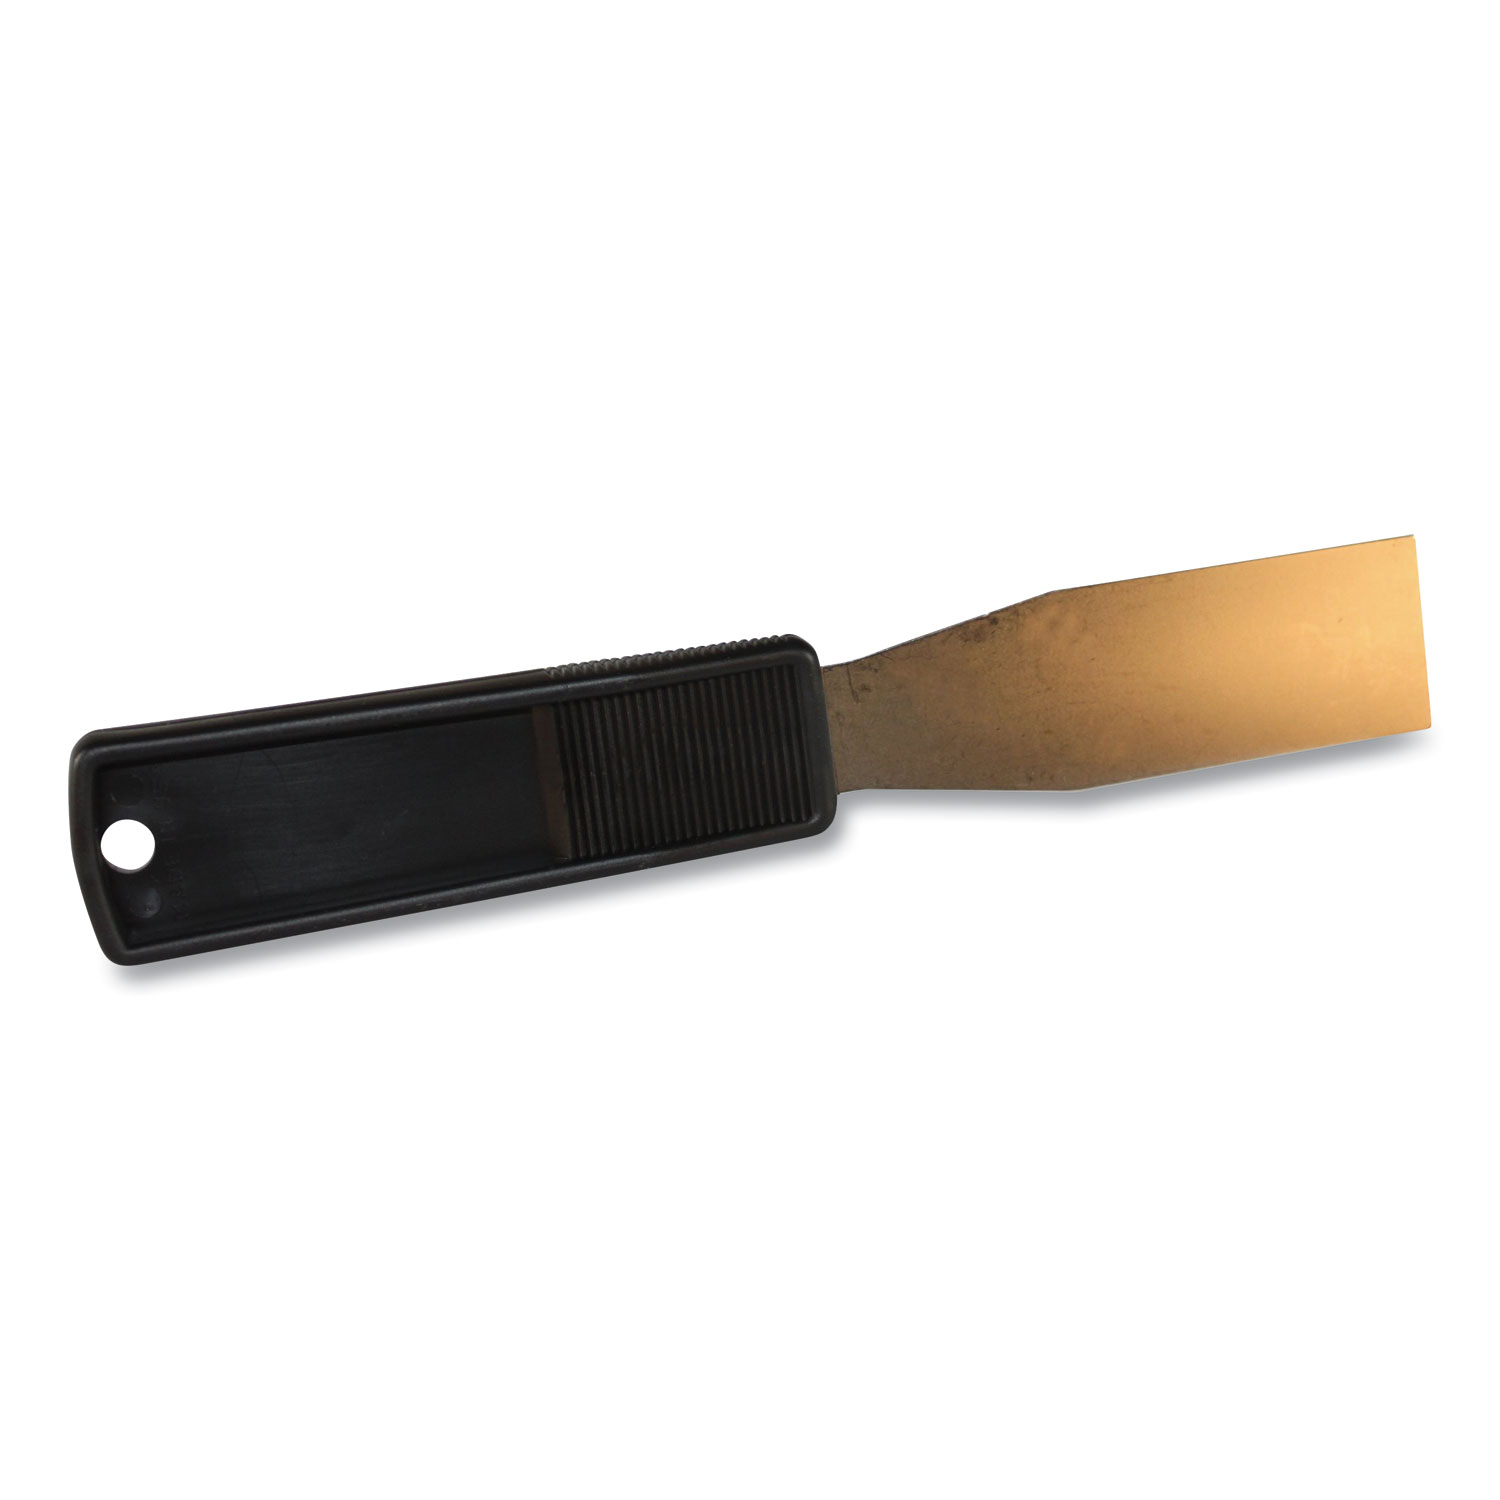  Impact 3200 Putty Knife, 1.25W Blade, Stainless Steel/Polypropylene, Black (IMP811683) 